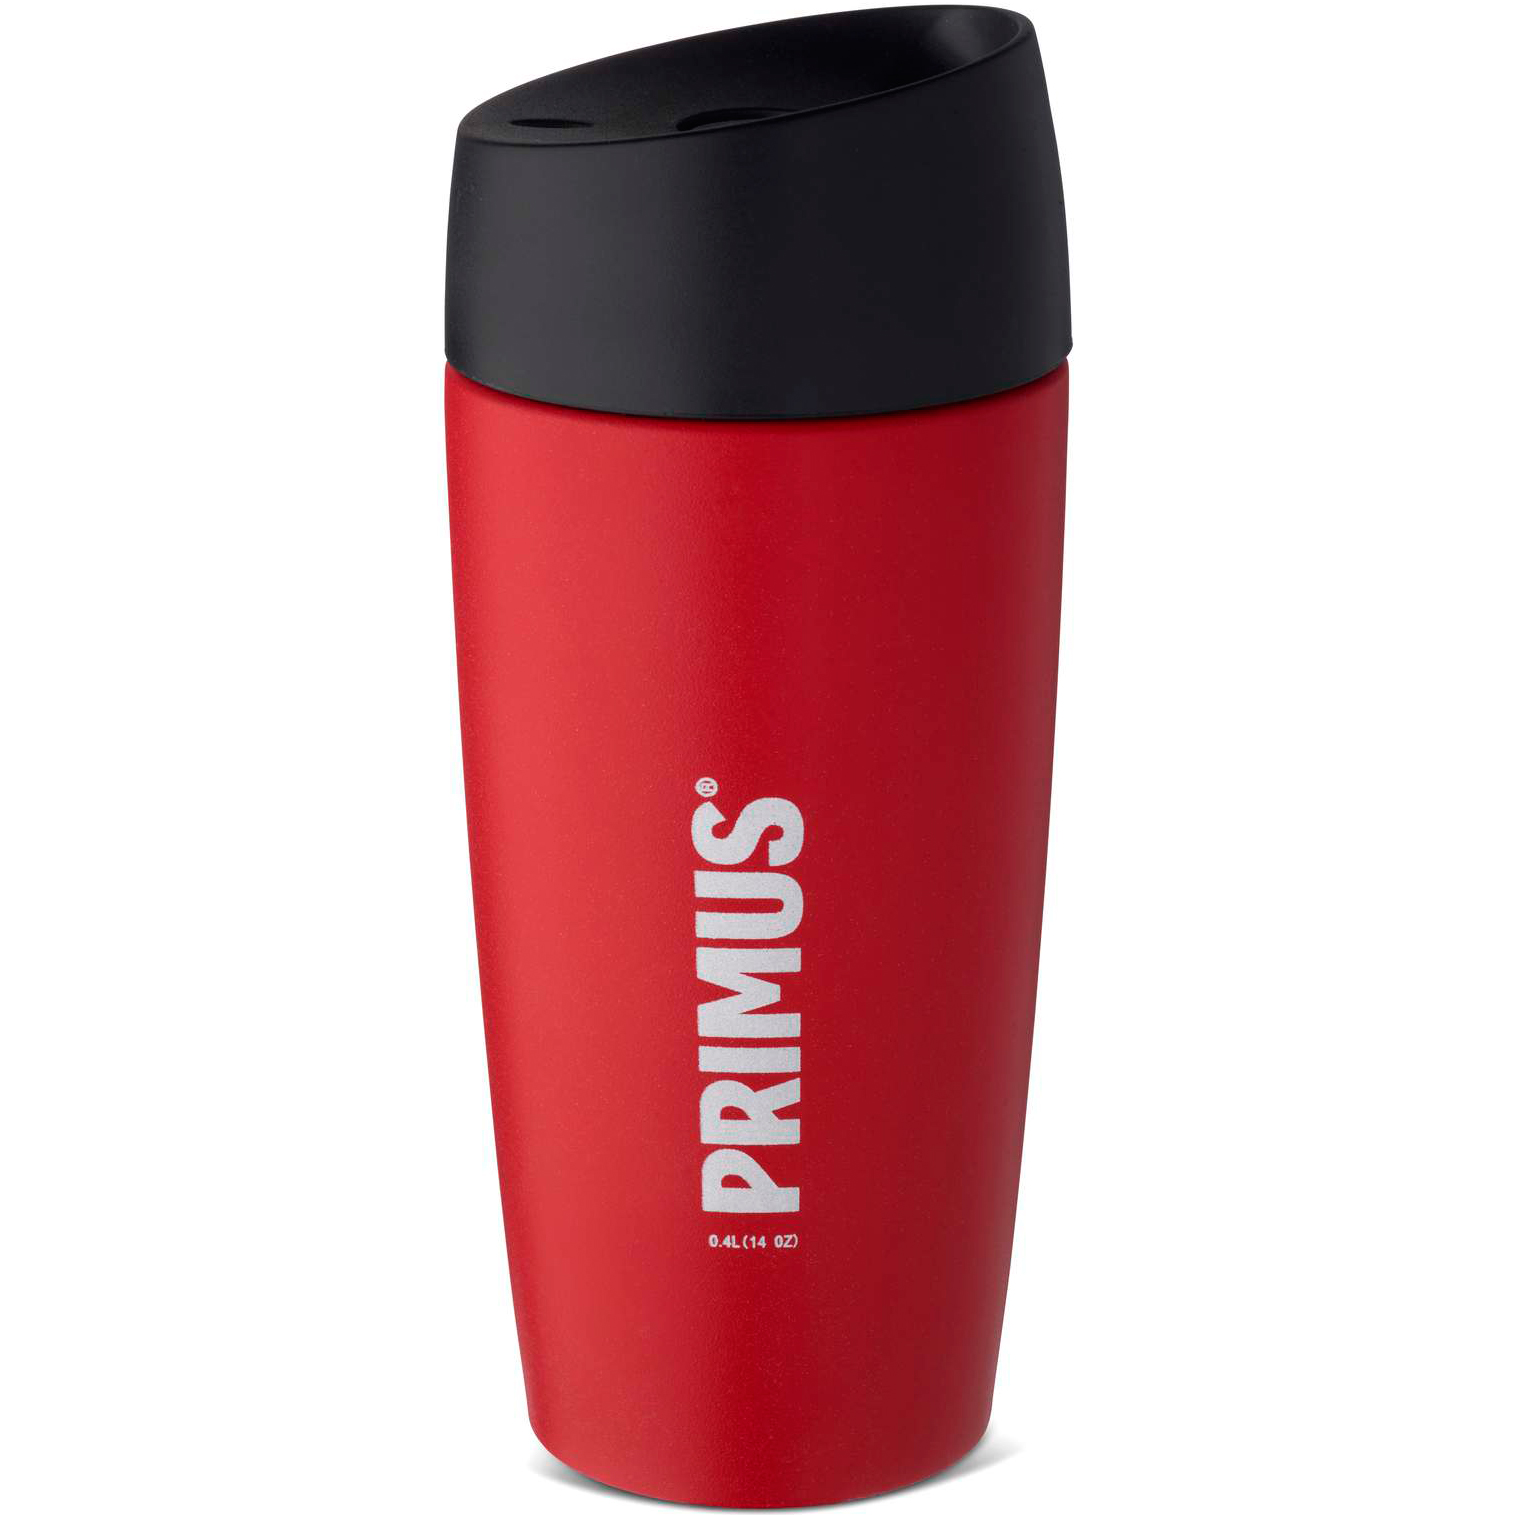 Productfoto van Primus Vacuum Commuter 0.4 Liter Thermo Mug - barn red